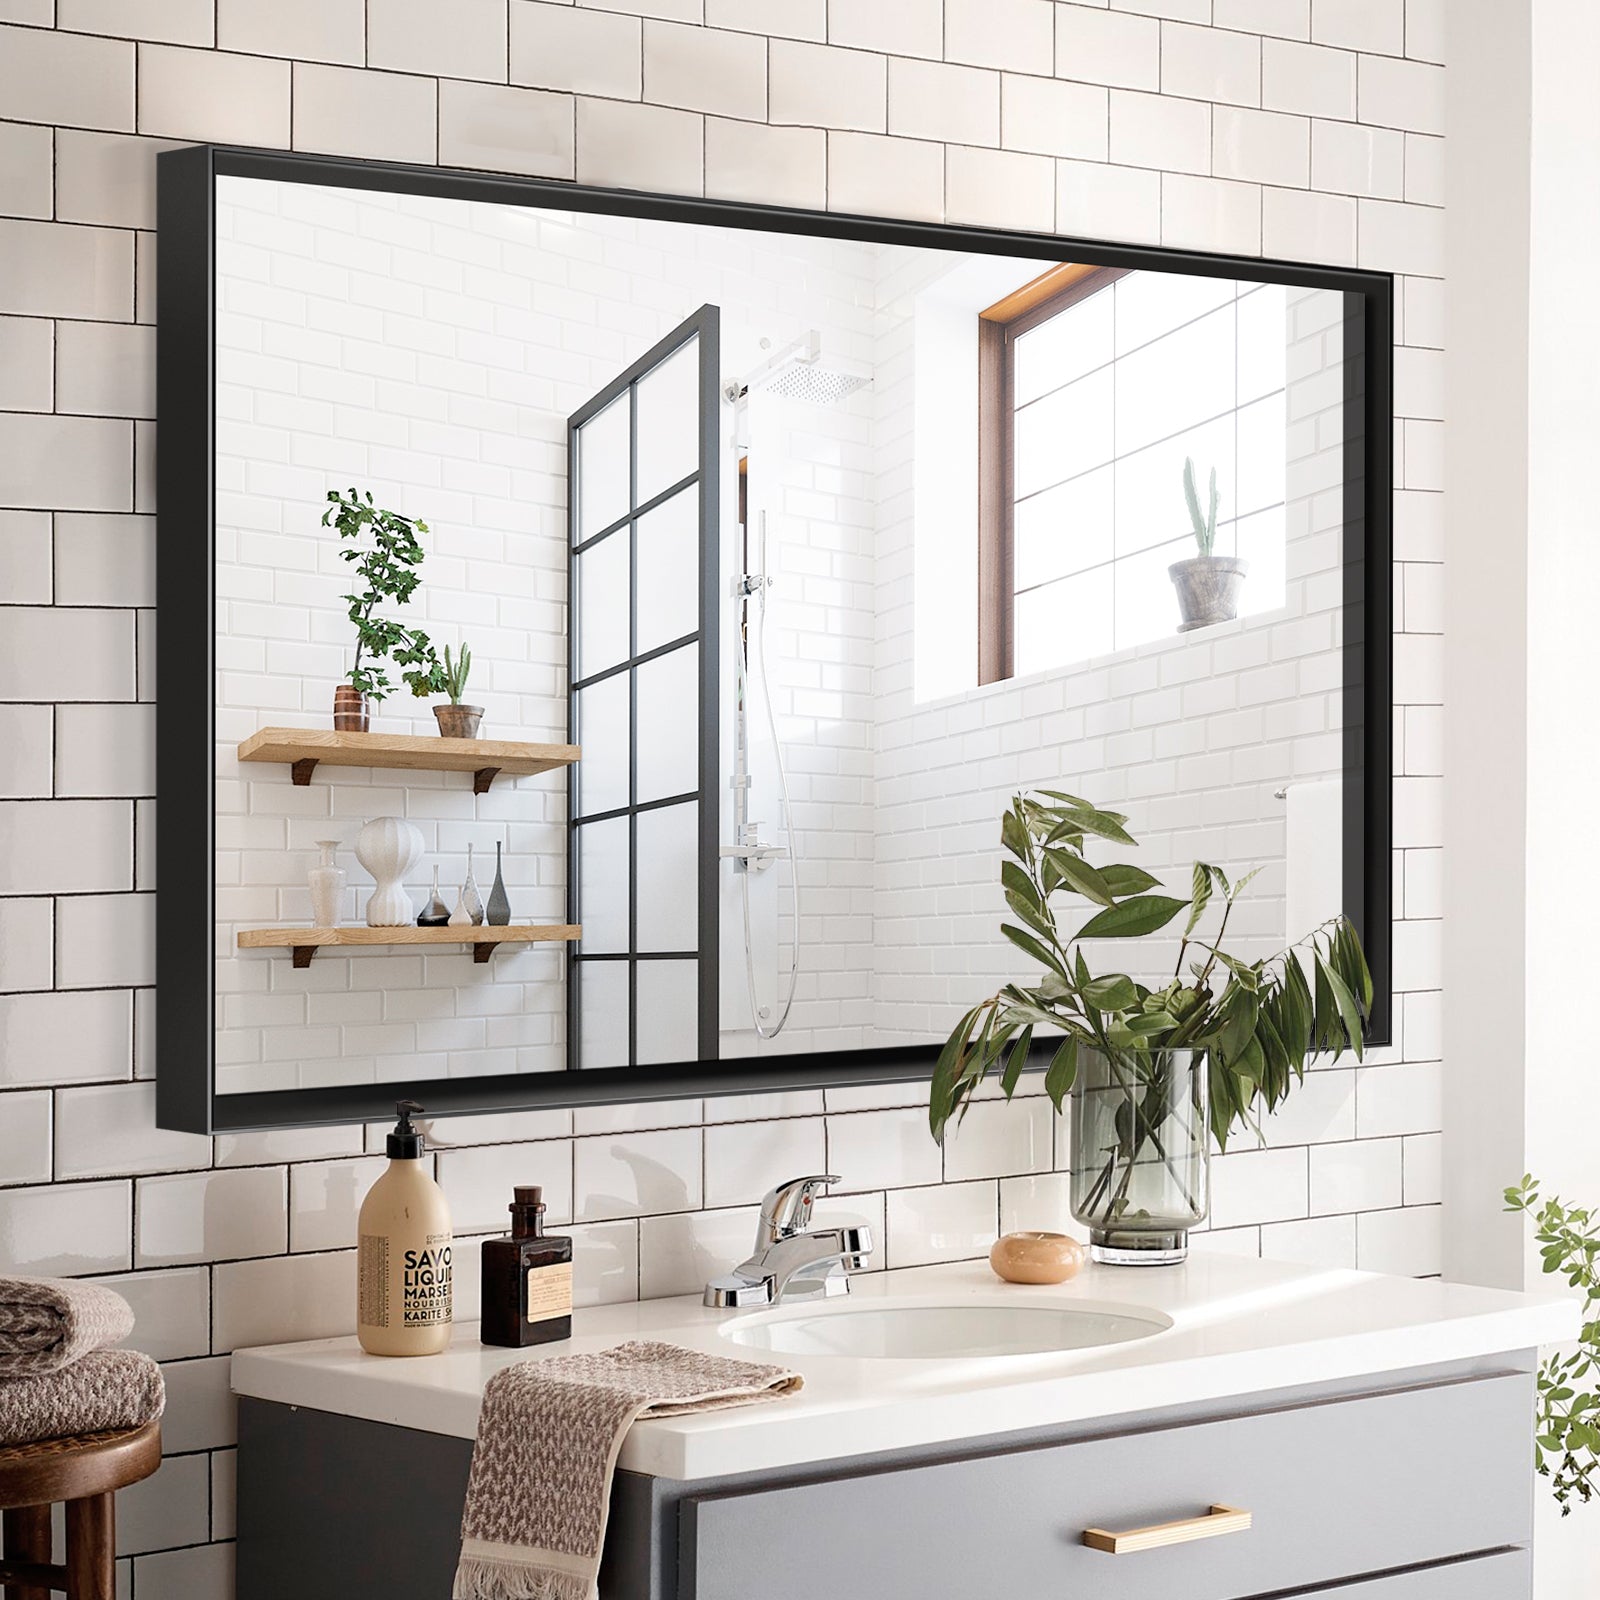 Glossy Black Bathroom Wall Mirrors 48x30inch (Horizontal & Vertical)